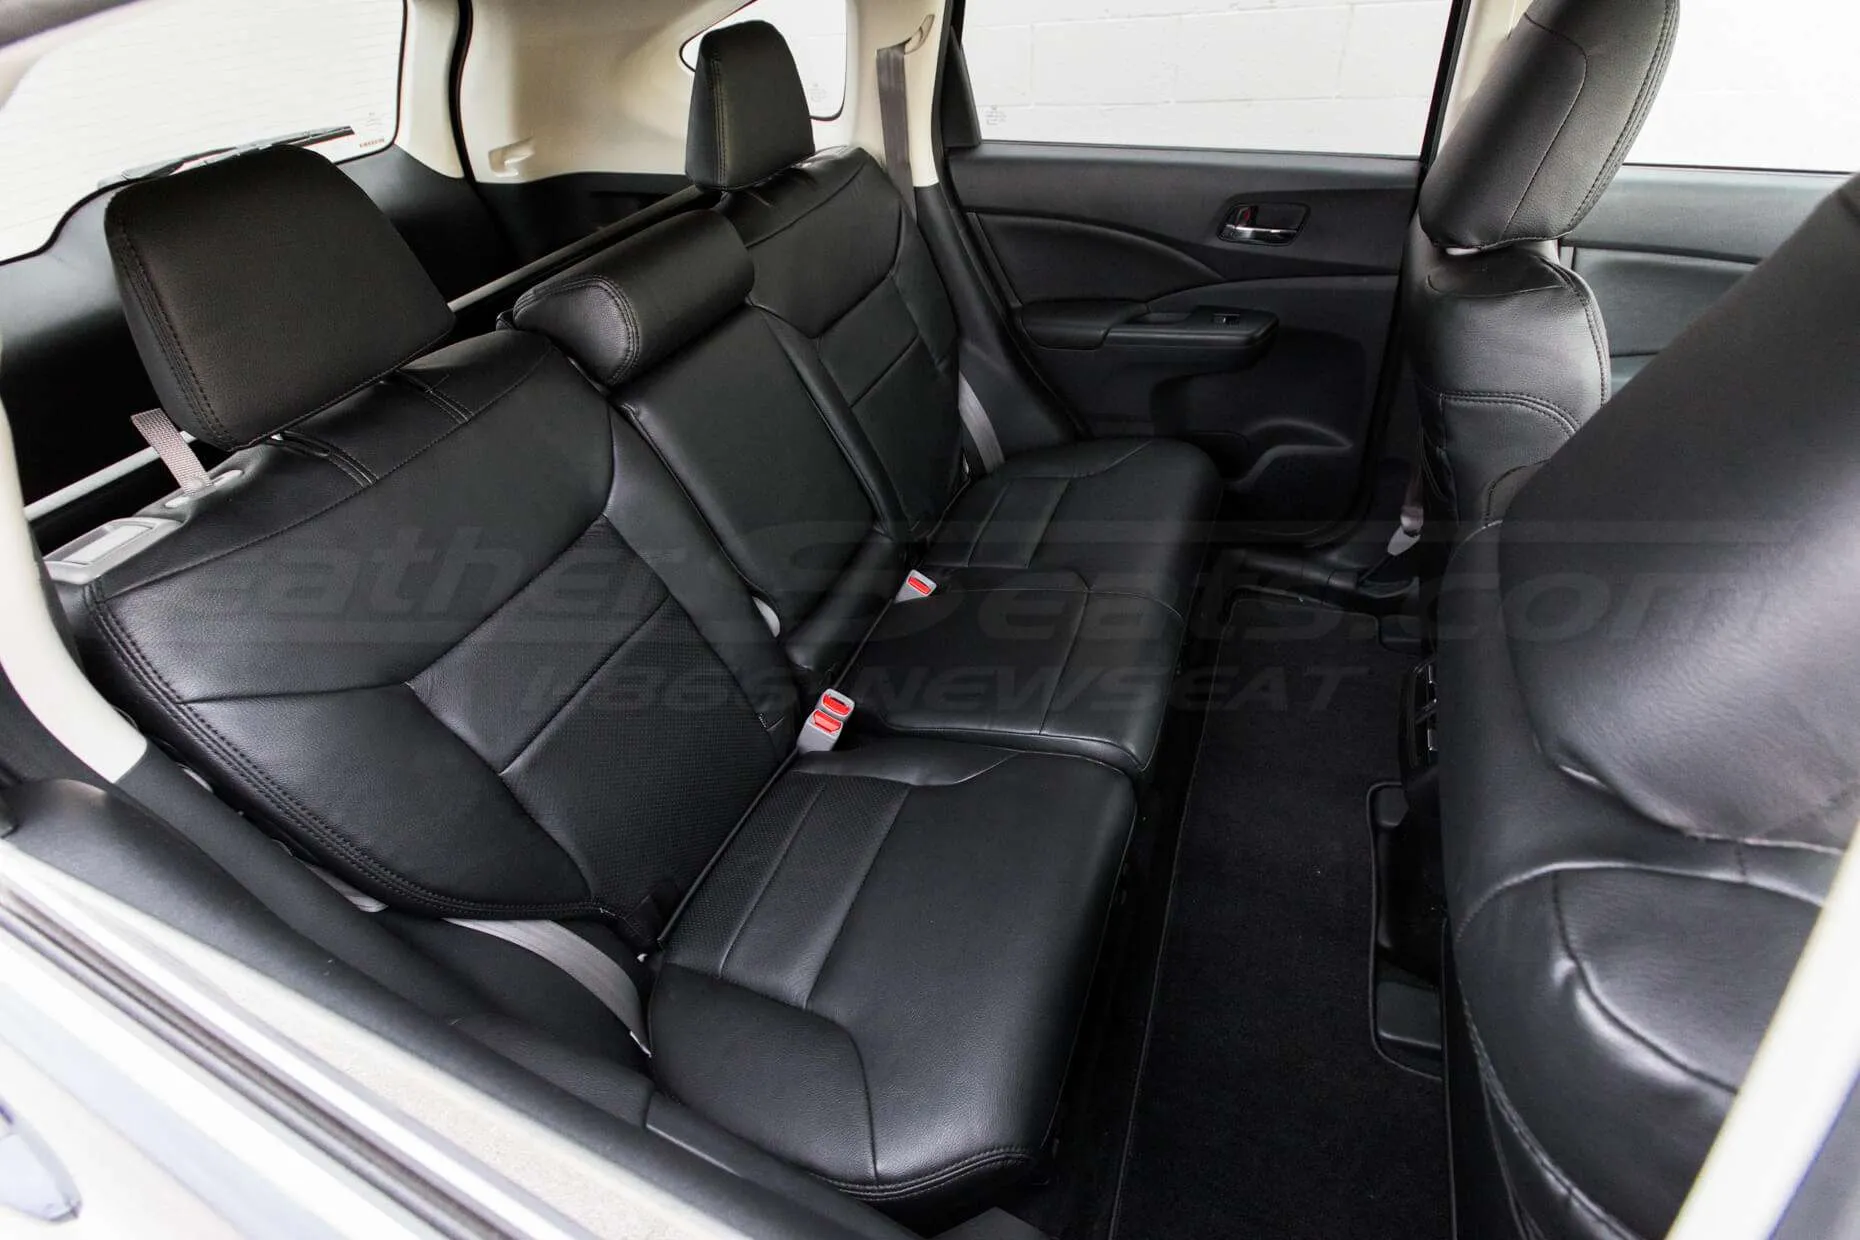 Honda CRV Leather Seat Kit - Black - Installed - Rear seats